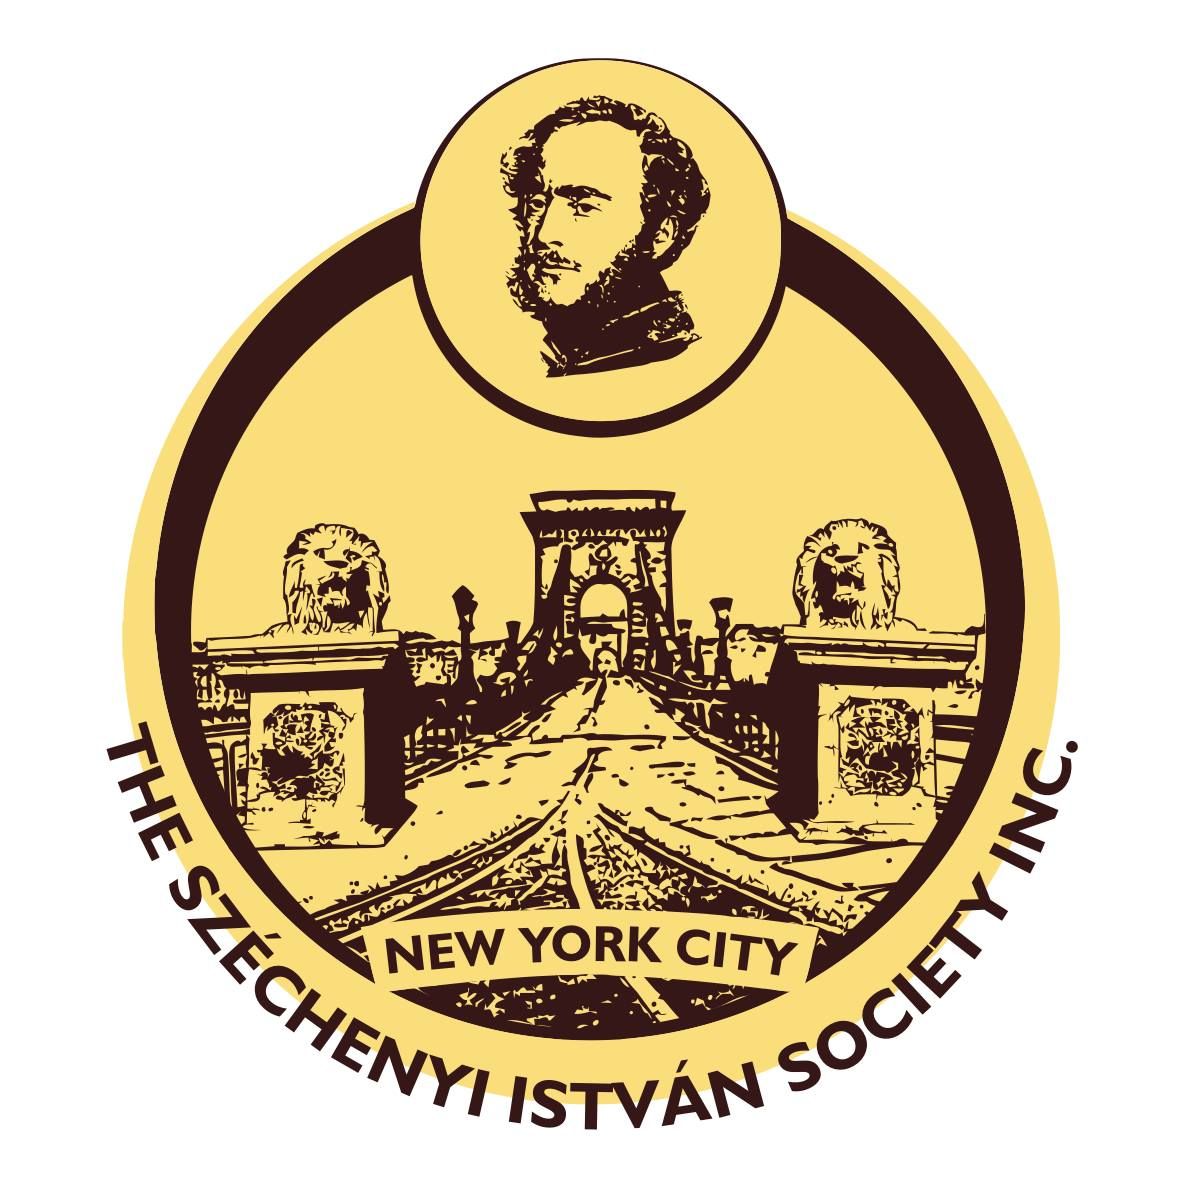 Hungarian Organizations in New York - The Széchenyi István Society